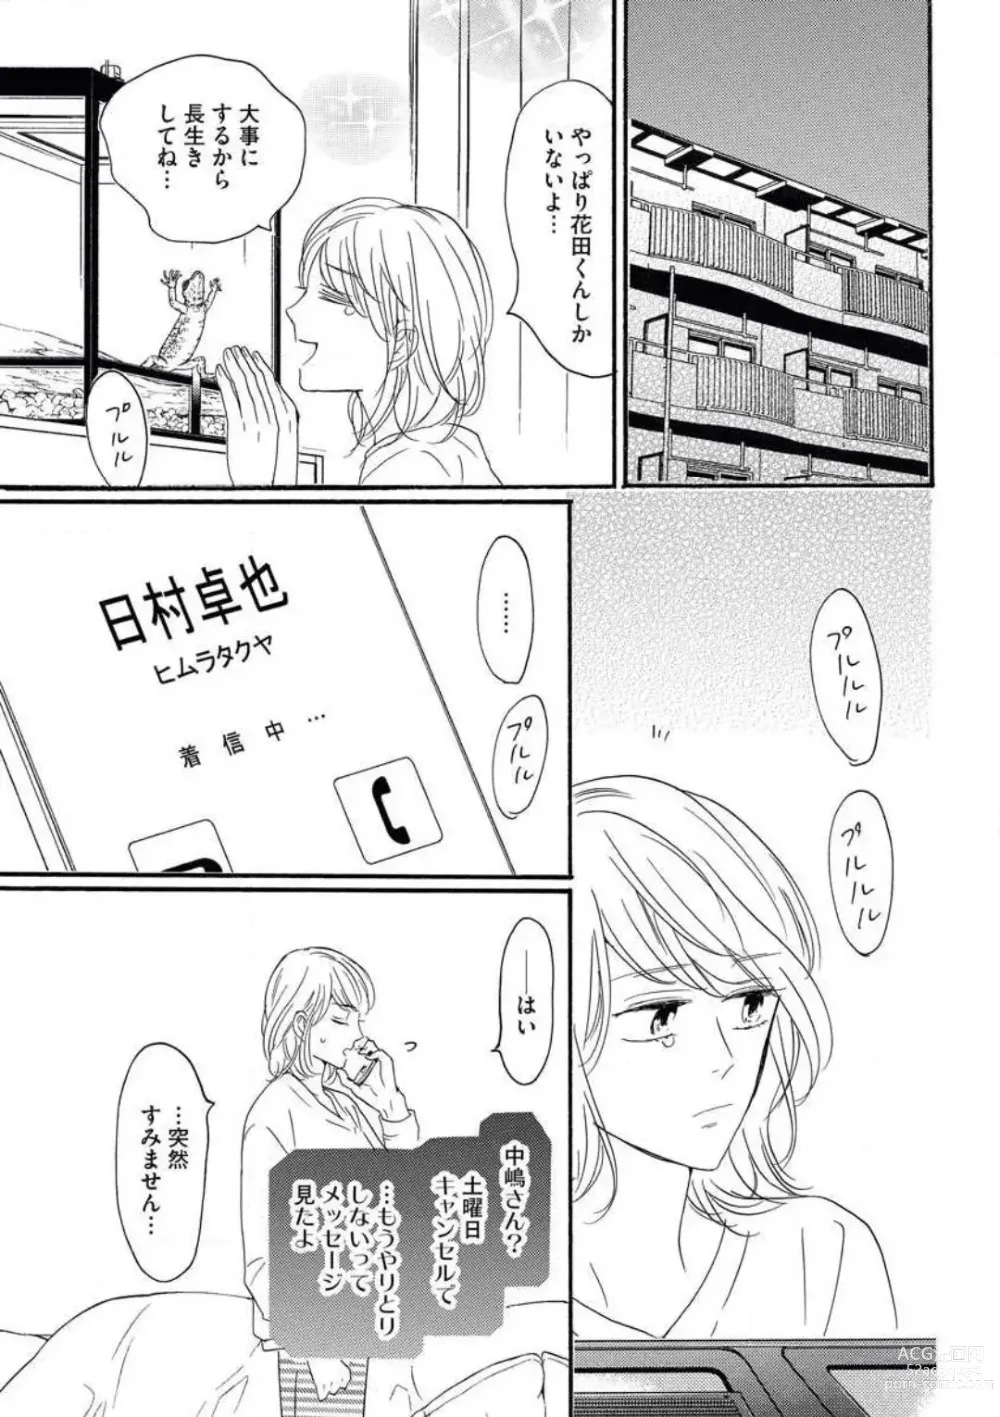 Page 18 of manga Giwaku no Rabu Matchingu